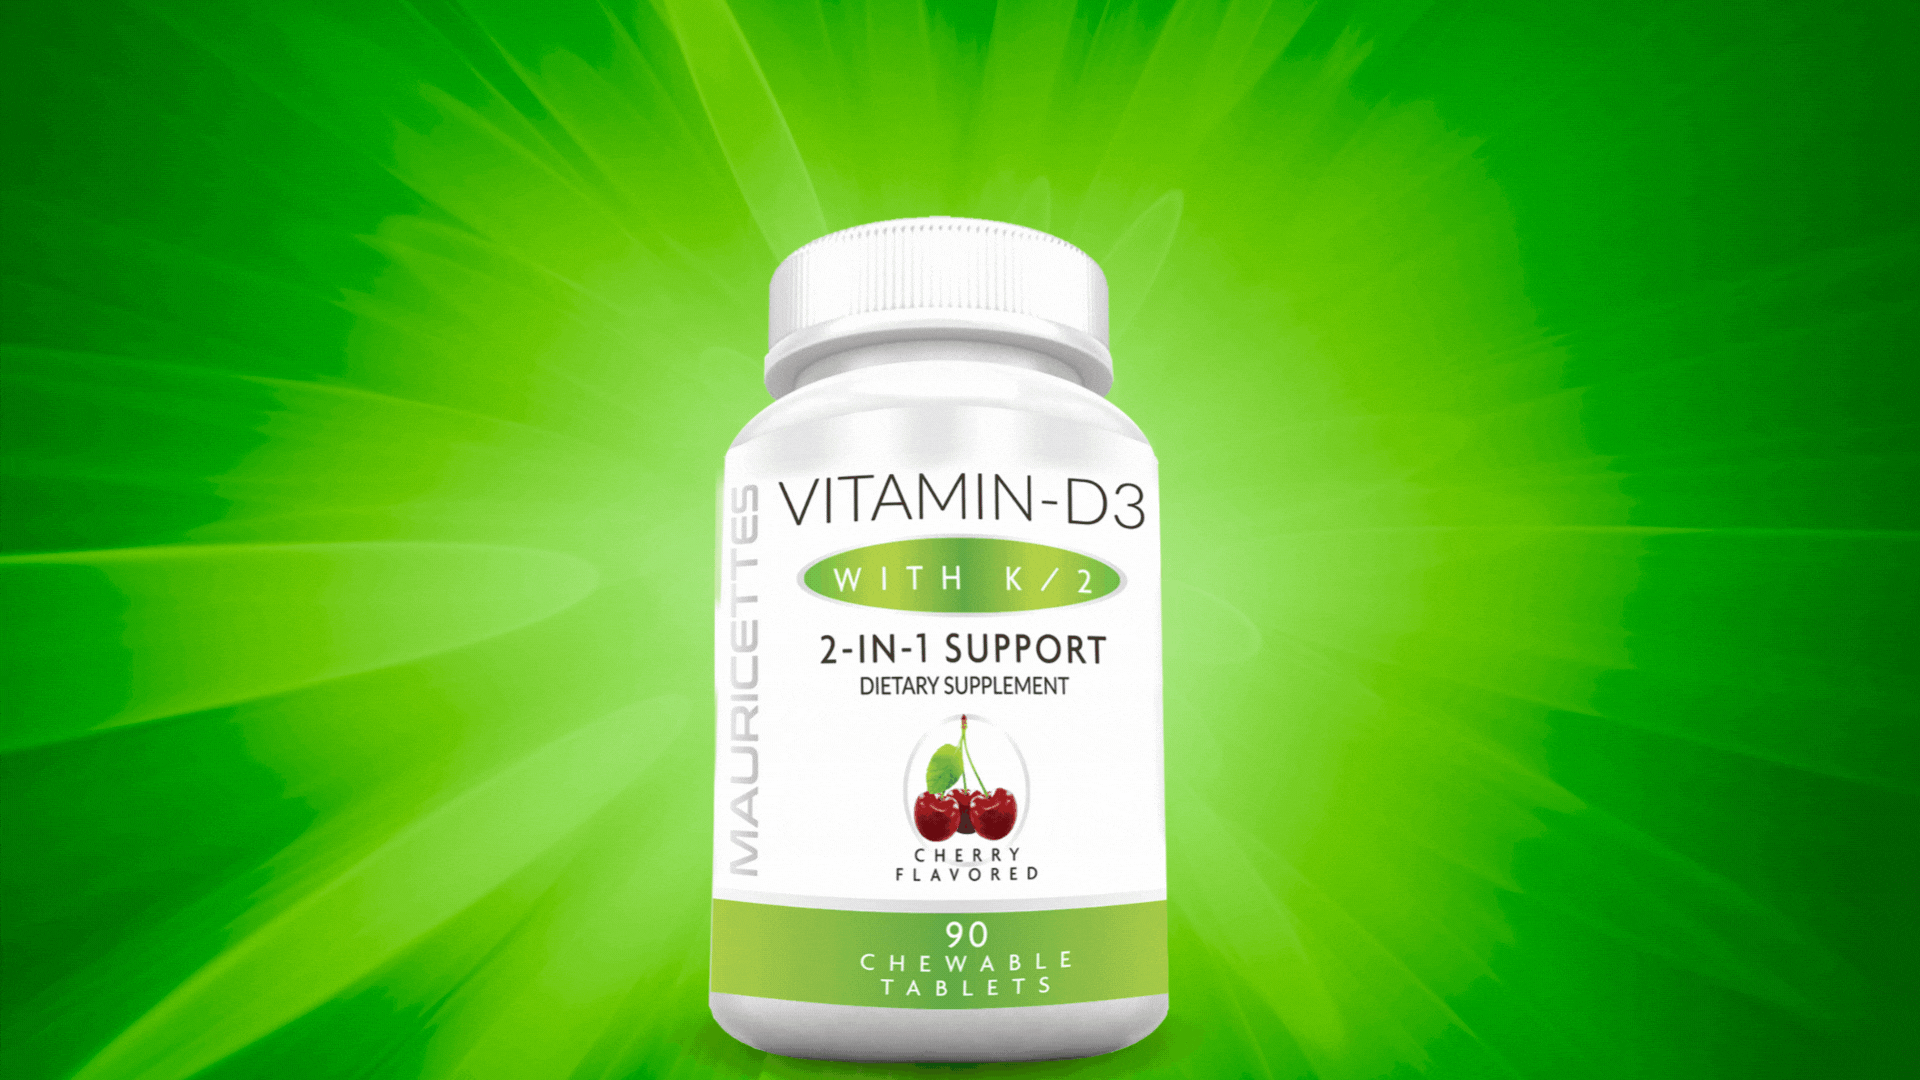 Vitamin D3 Video